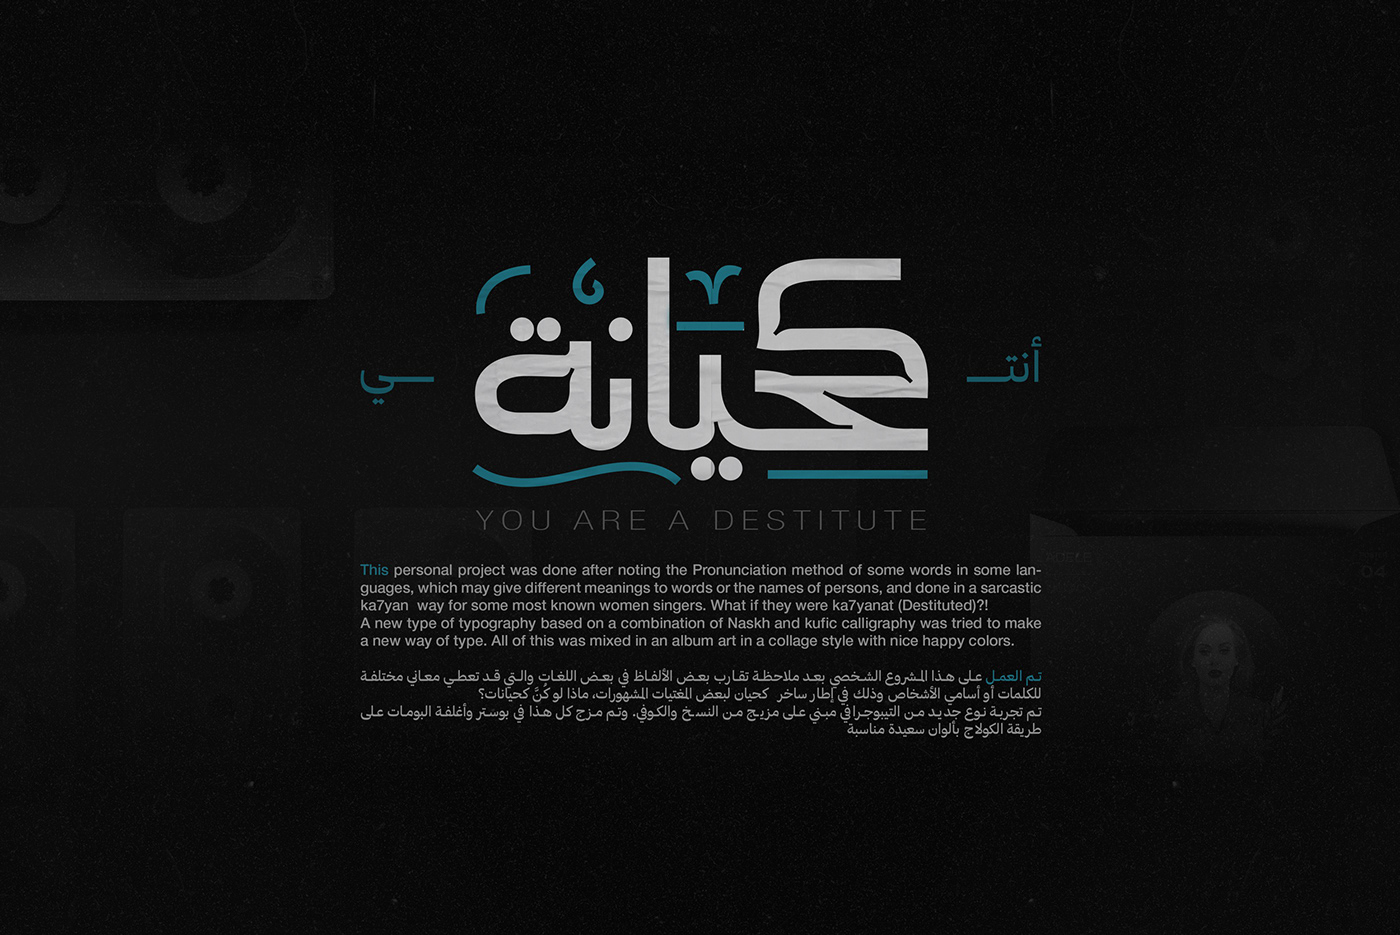 arabic calligraphy poster camila cabello Adele Hello selena gomez branding Logo album art تيبوجرافي type design social media